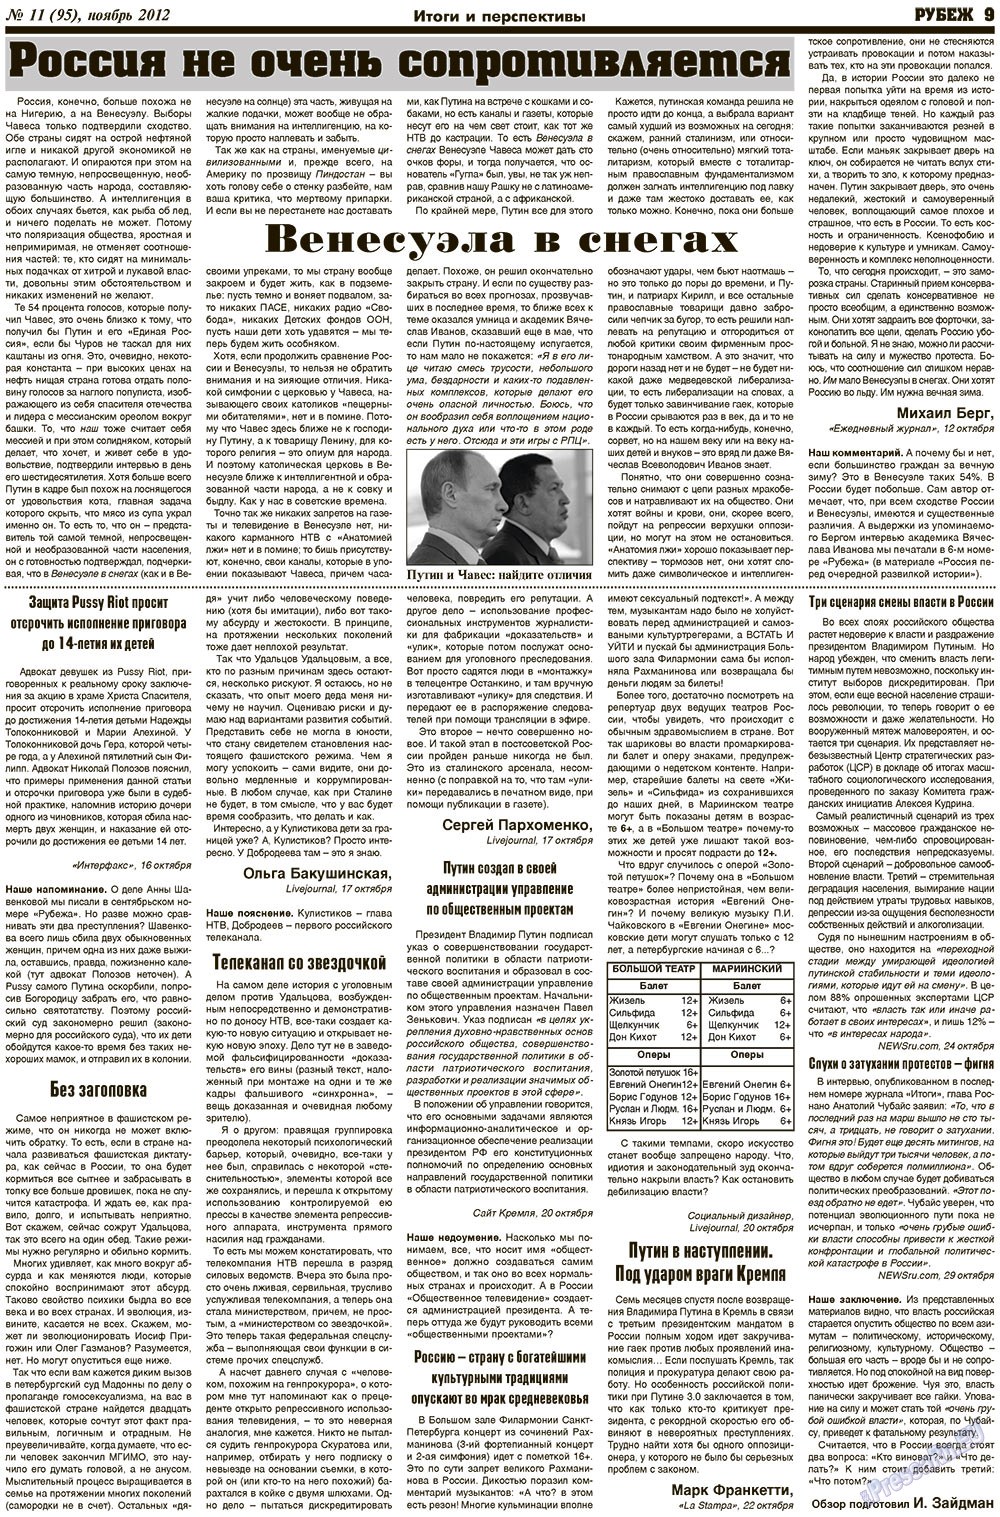 Рубеж, газета. 2012 №11 стр.9